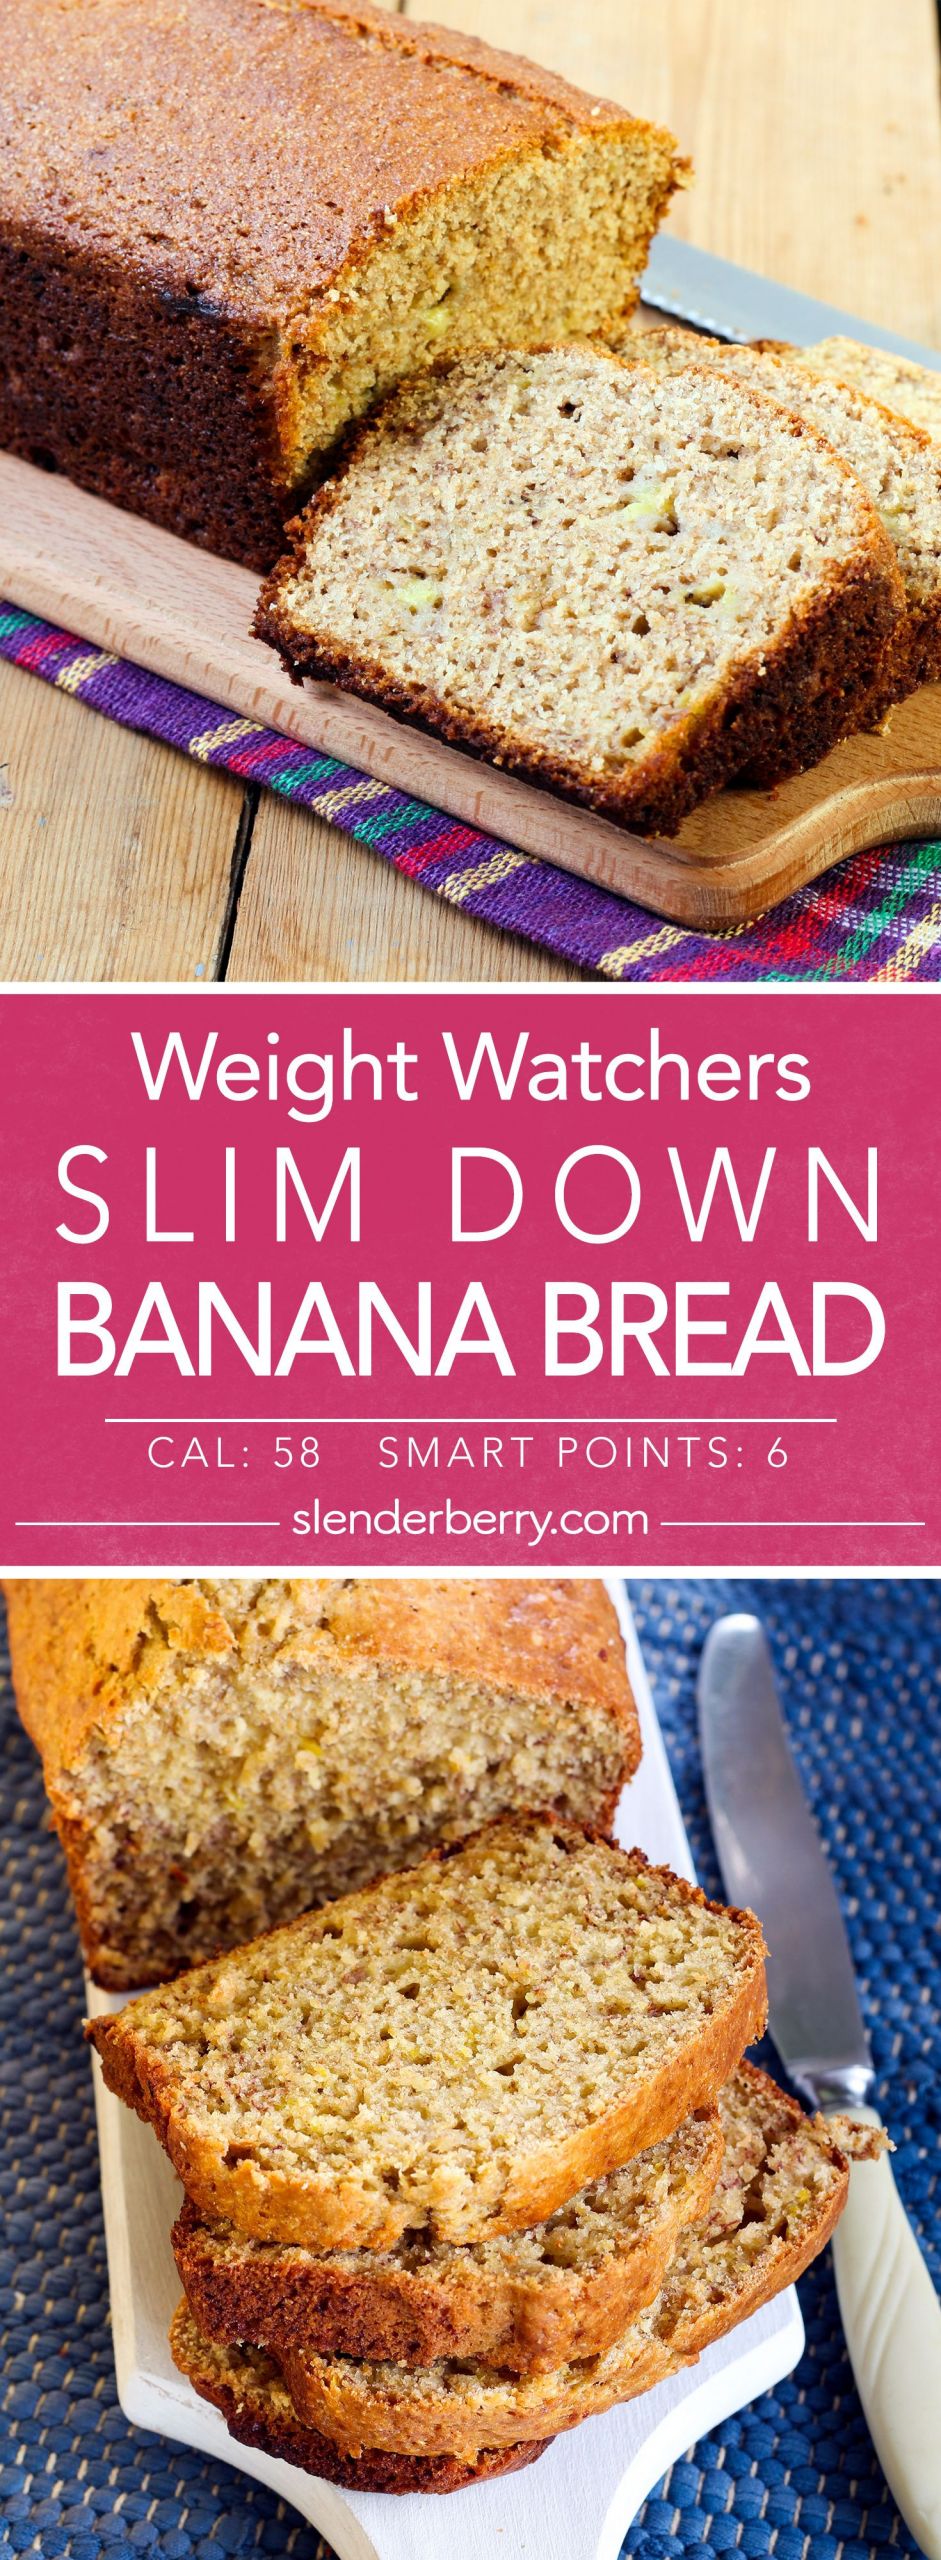 Weight Watchers Banana Recipes
 Slim Down Banana Bread Slenderberry Recipe